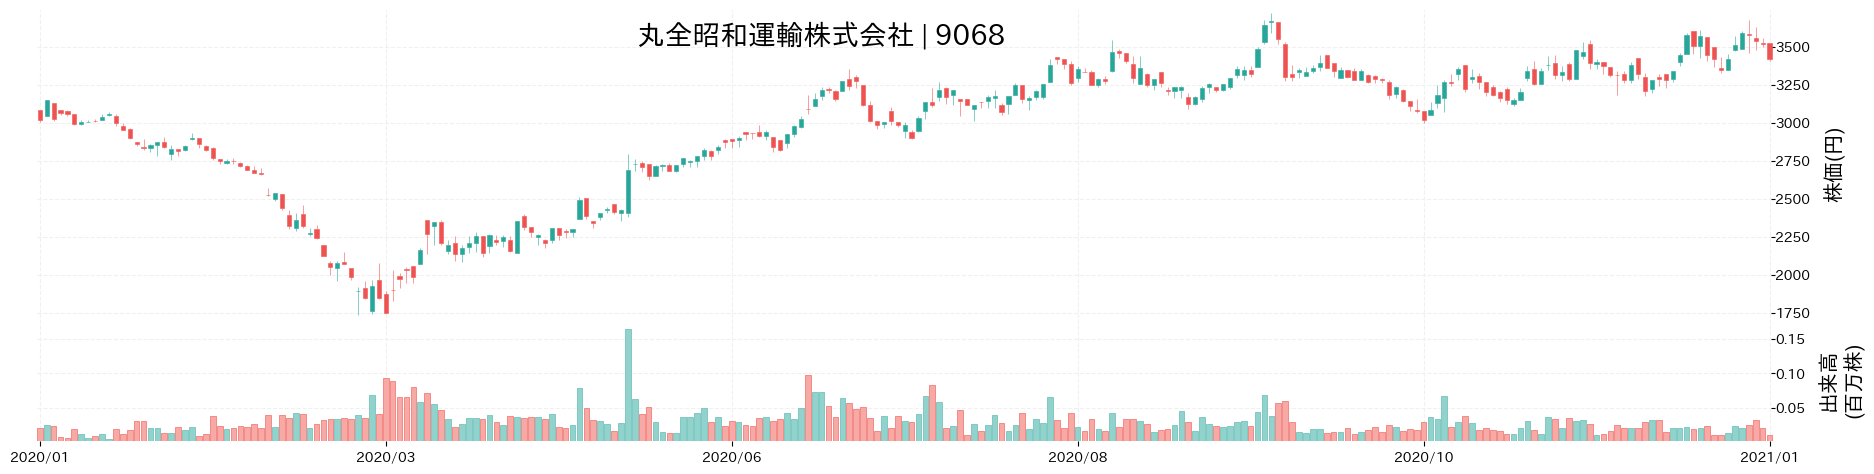 丸全昭和運輸の株価推移(2020)